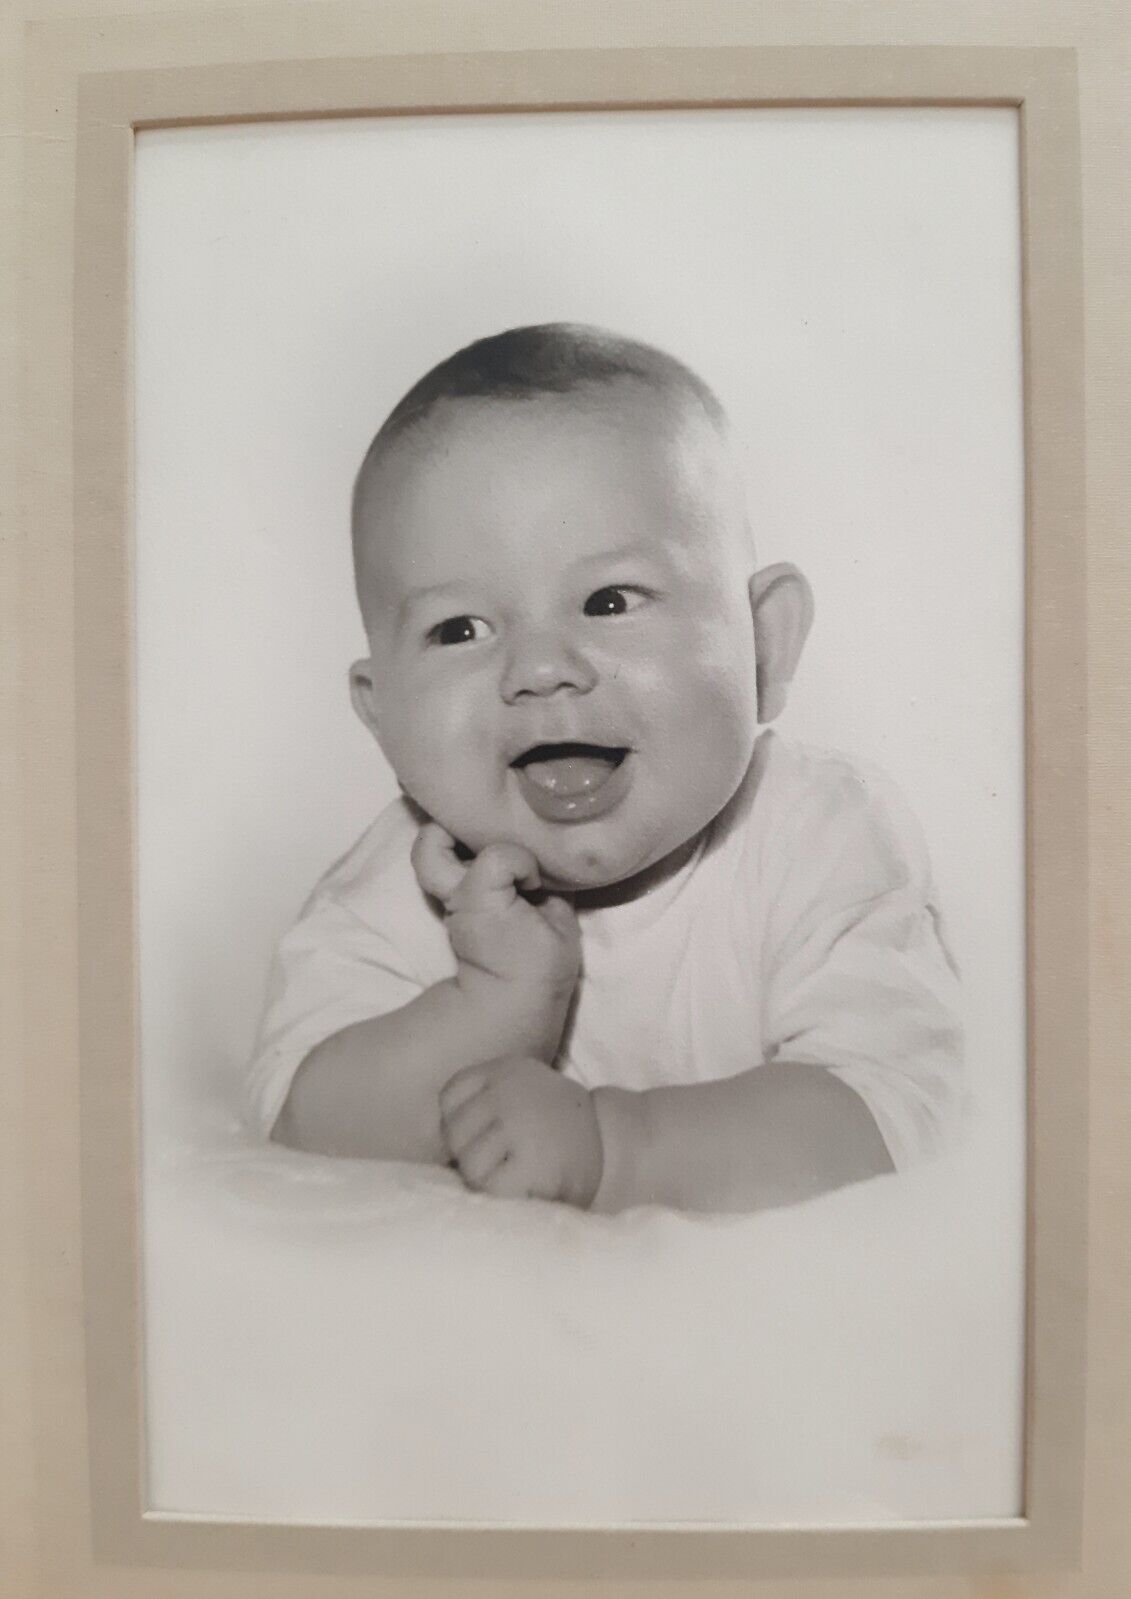 Vintage Baby Boy Photo Black & White Portrait 1950s Folding Cardboard Frame